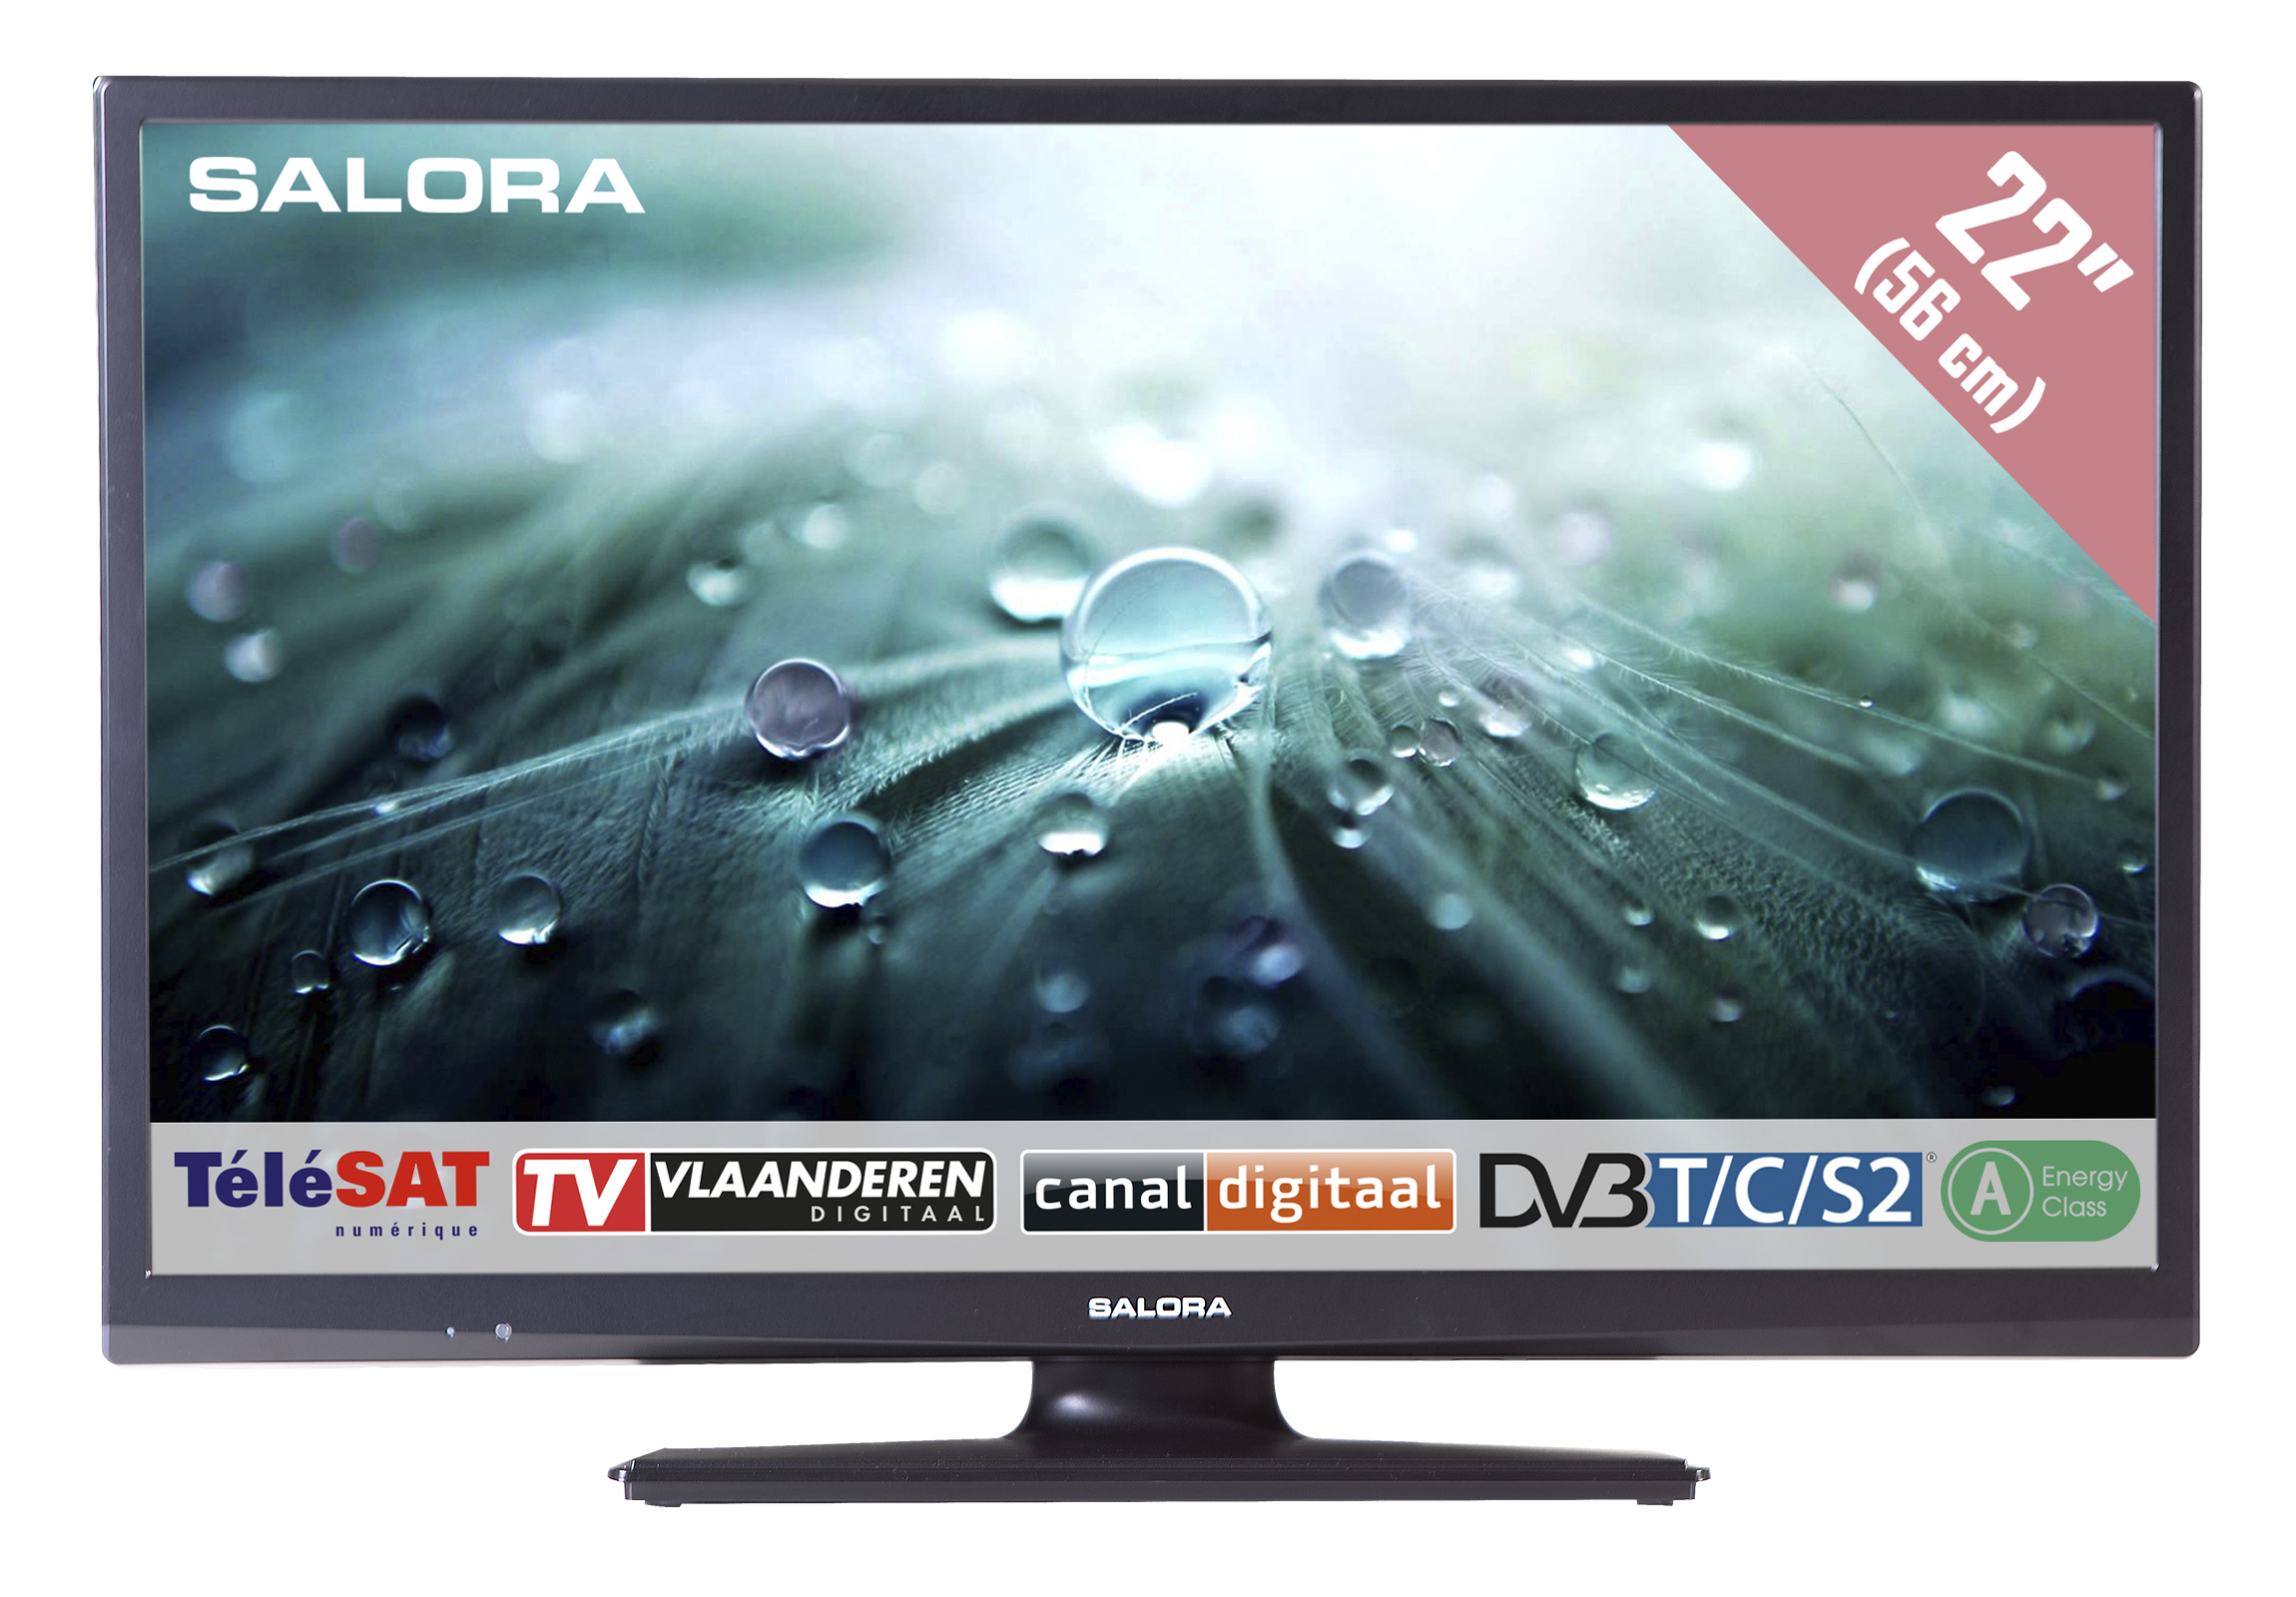 Salora 9100 series 22LED9109CTS2 TV